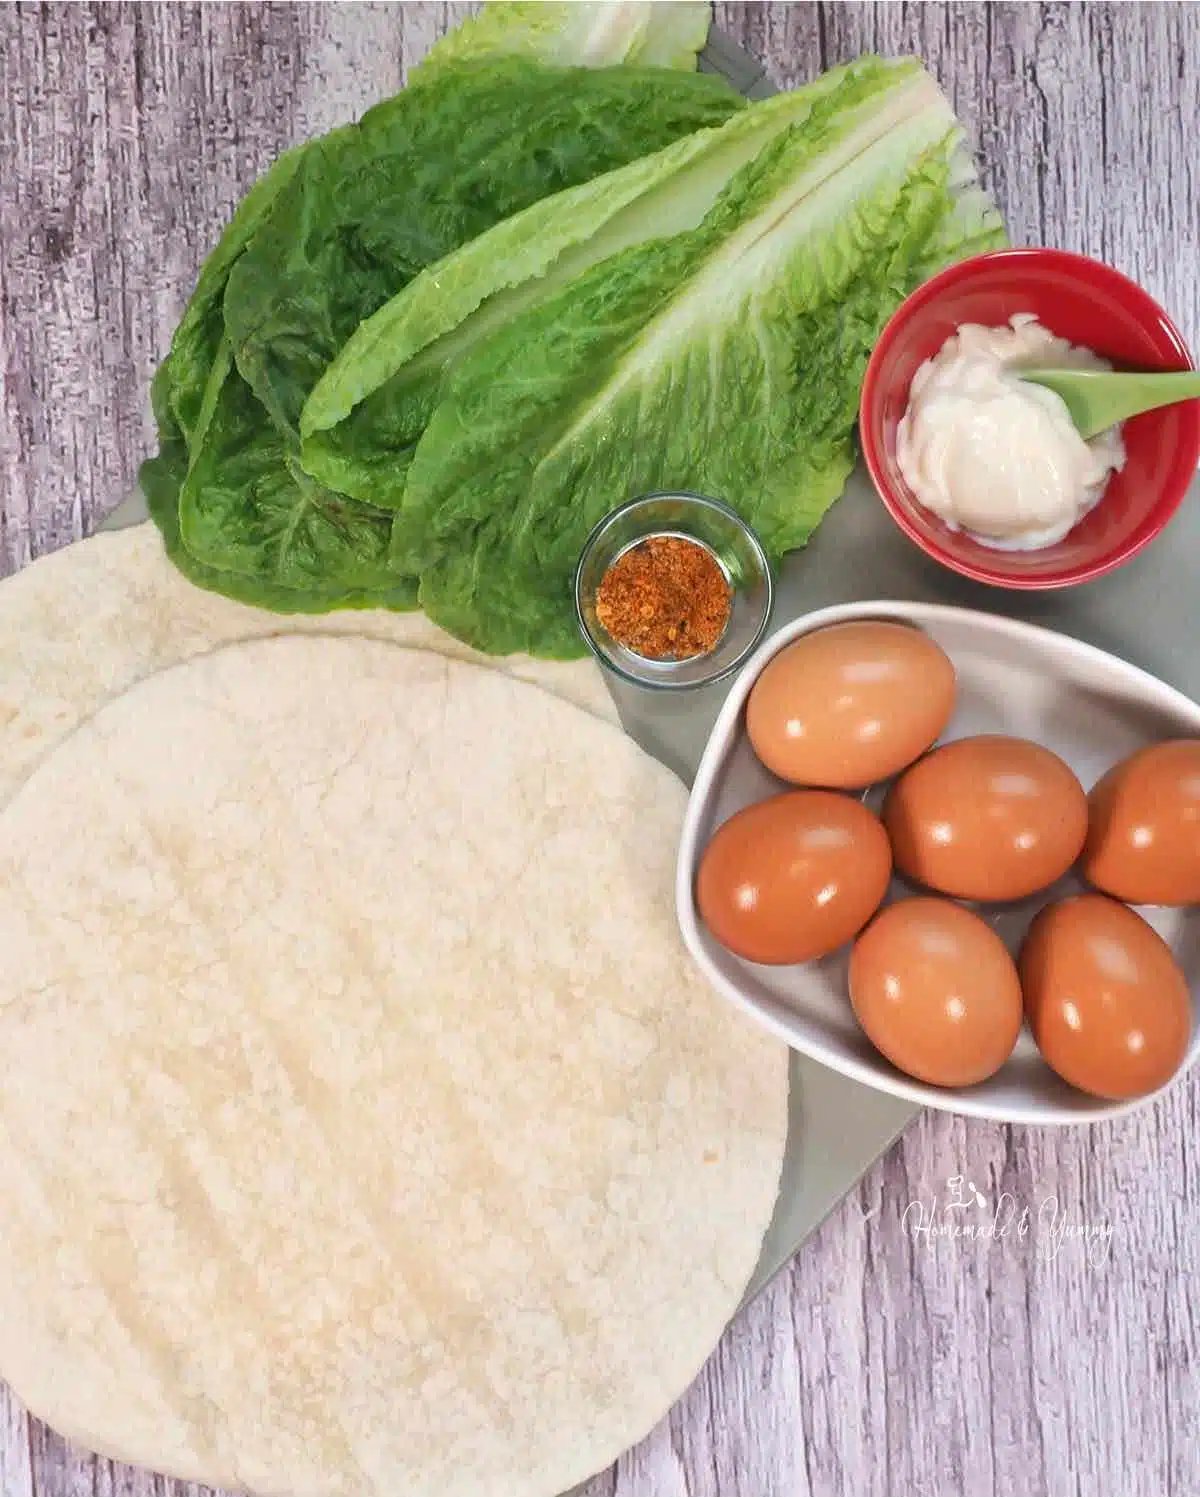 Ingredients for making egg salad sandwich wraps.